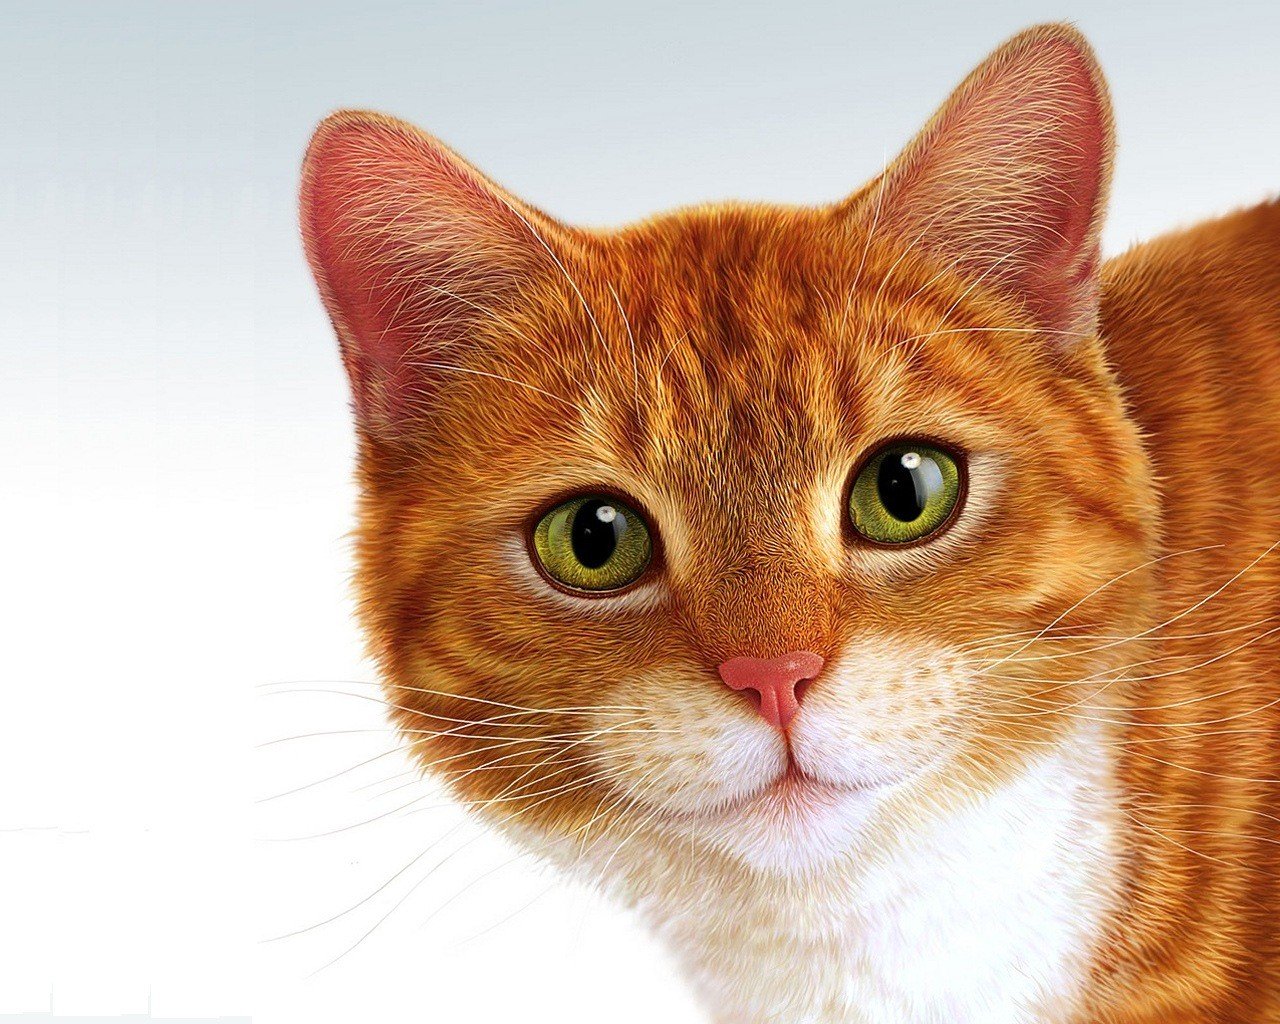 Animals cat garfield wallpapers hd desktop and mobile backgrounds